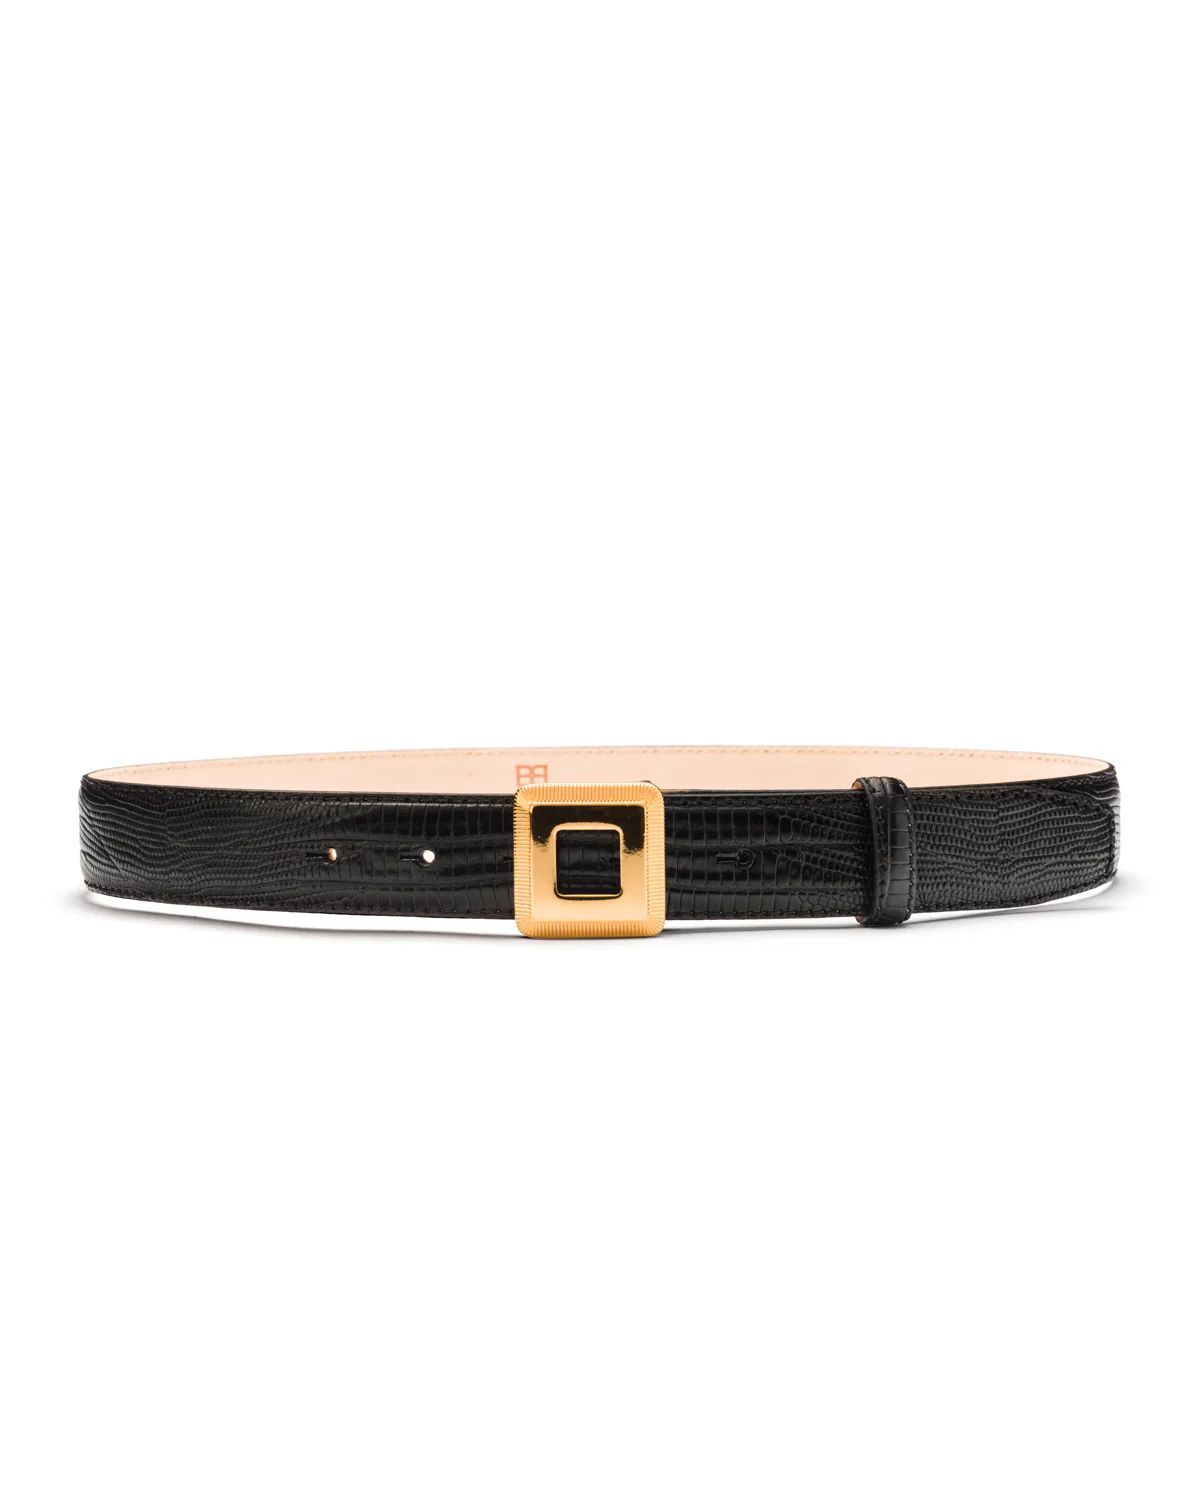 Adriana gold buckle black lizard print leather belt | Black & Brown London